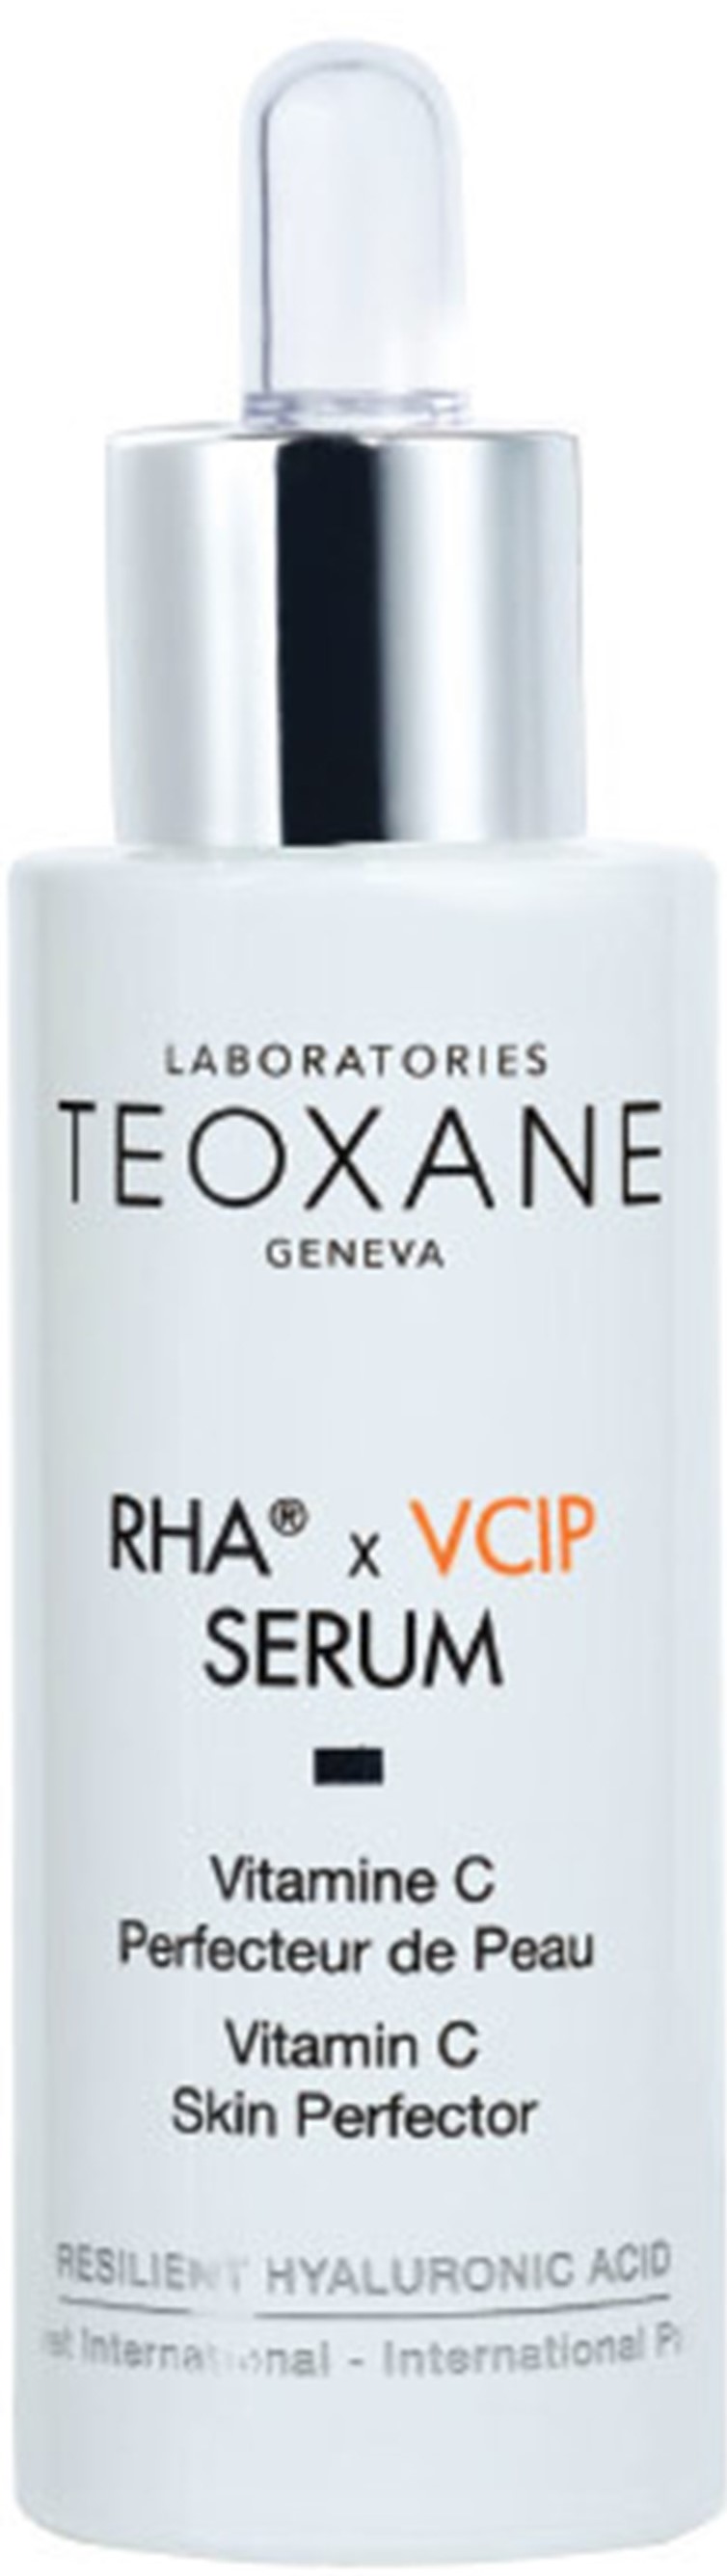 Teoxane-RHA-VCIP-Serum-30-ml---Yogun-Bak-7859.jpg (160 KB)